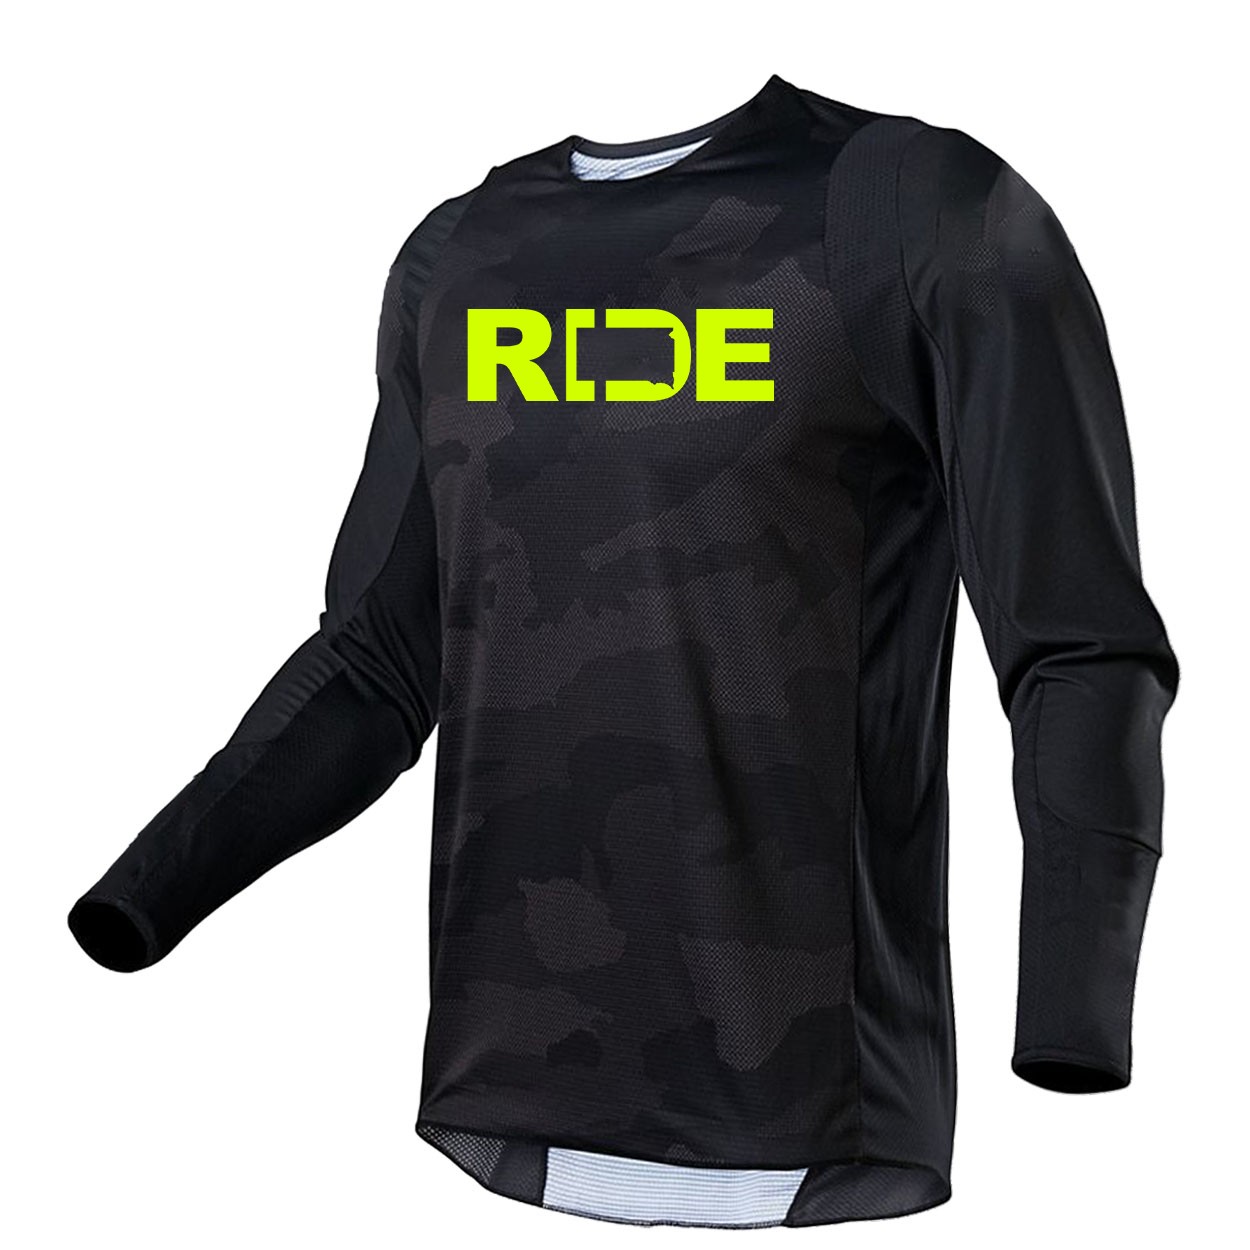 Ride South Dakota Classic Performance Jersey Long Sleeve Shirt Black Camo (Hi-Vis Logo)